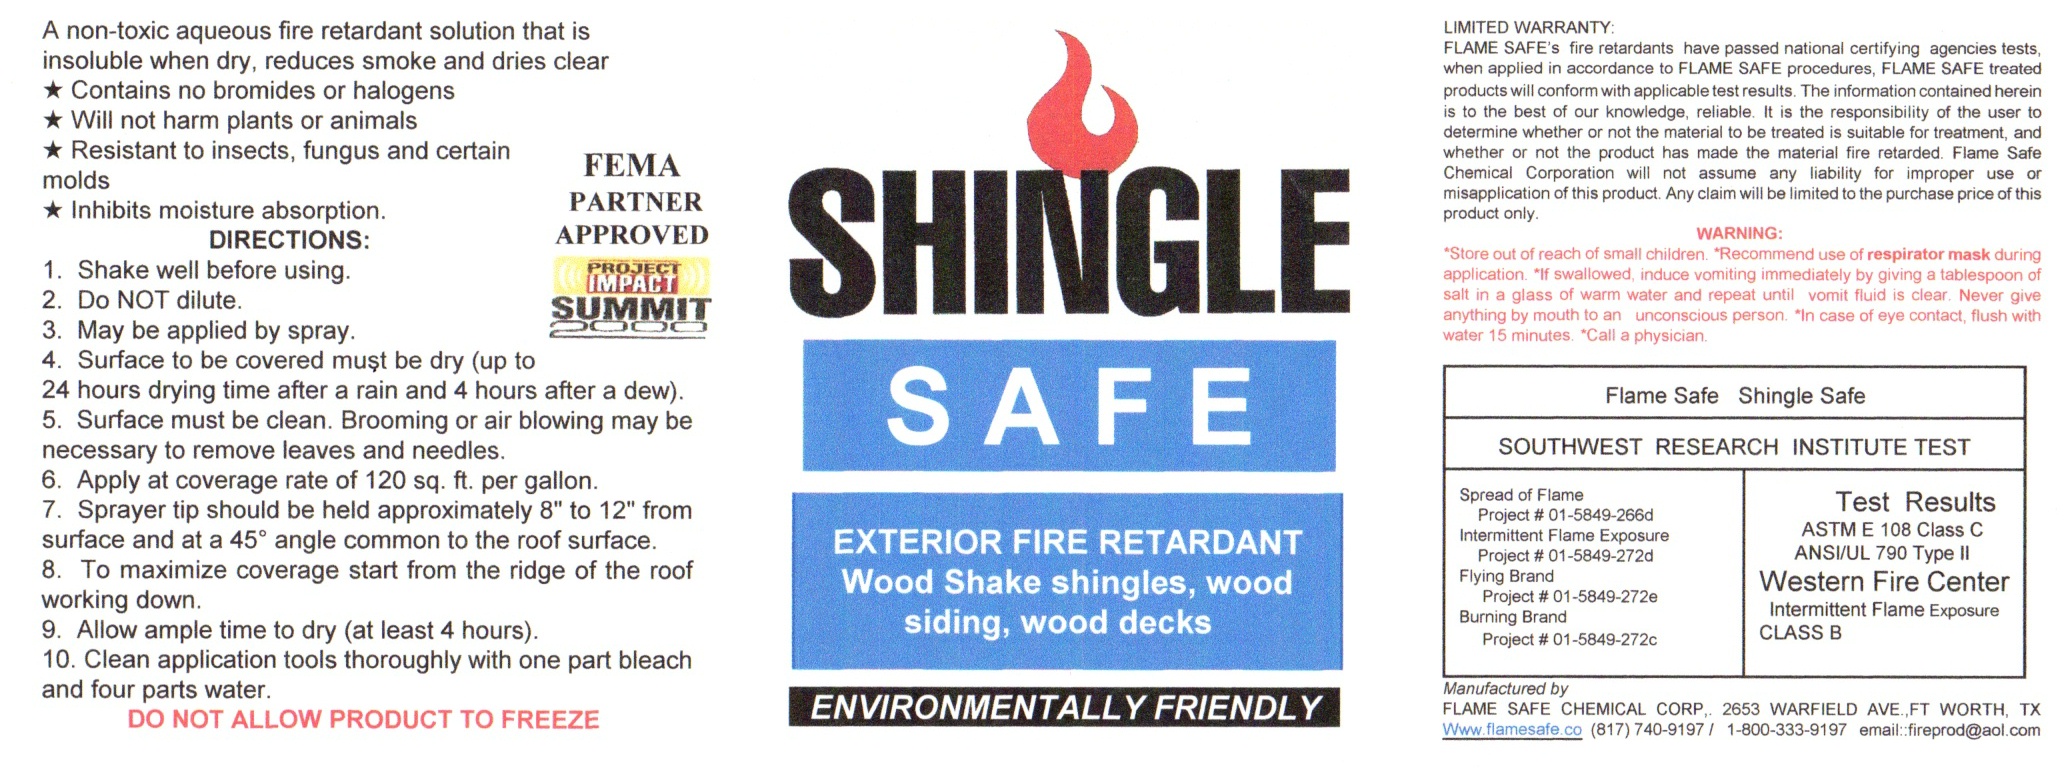 Shingle Safe fire retardant label